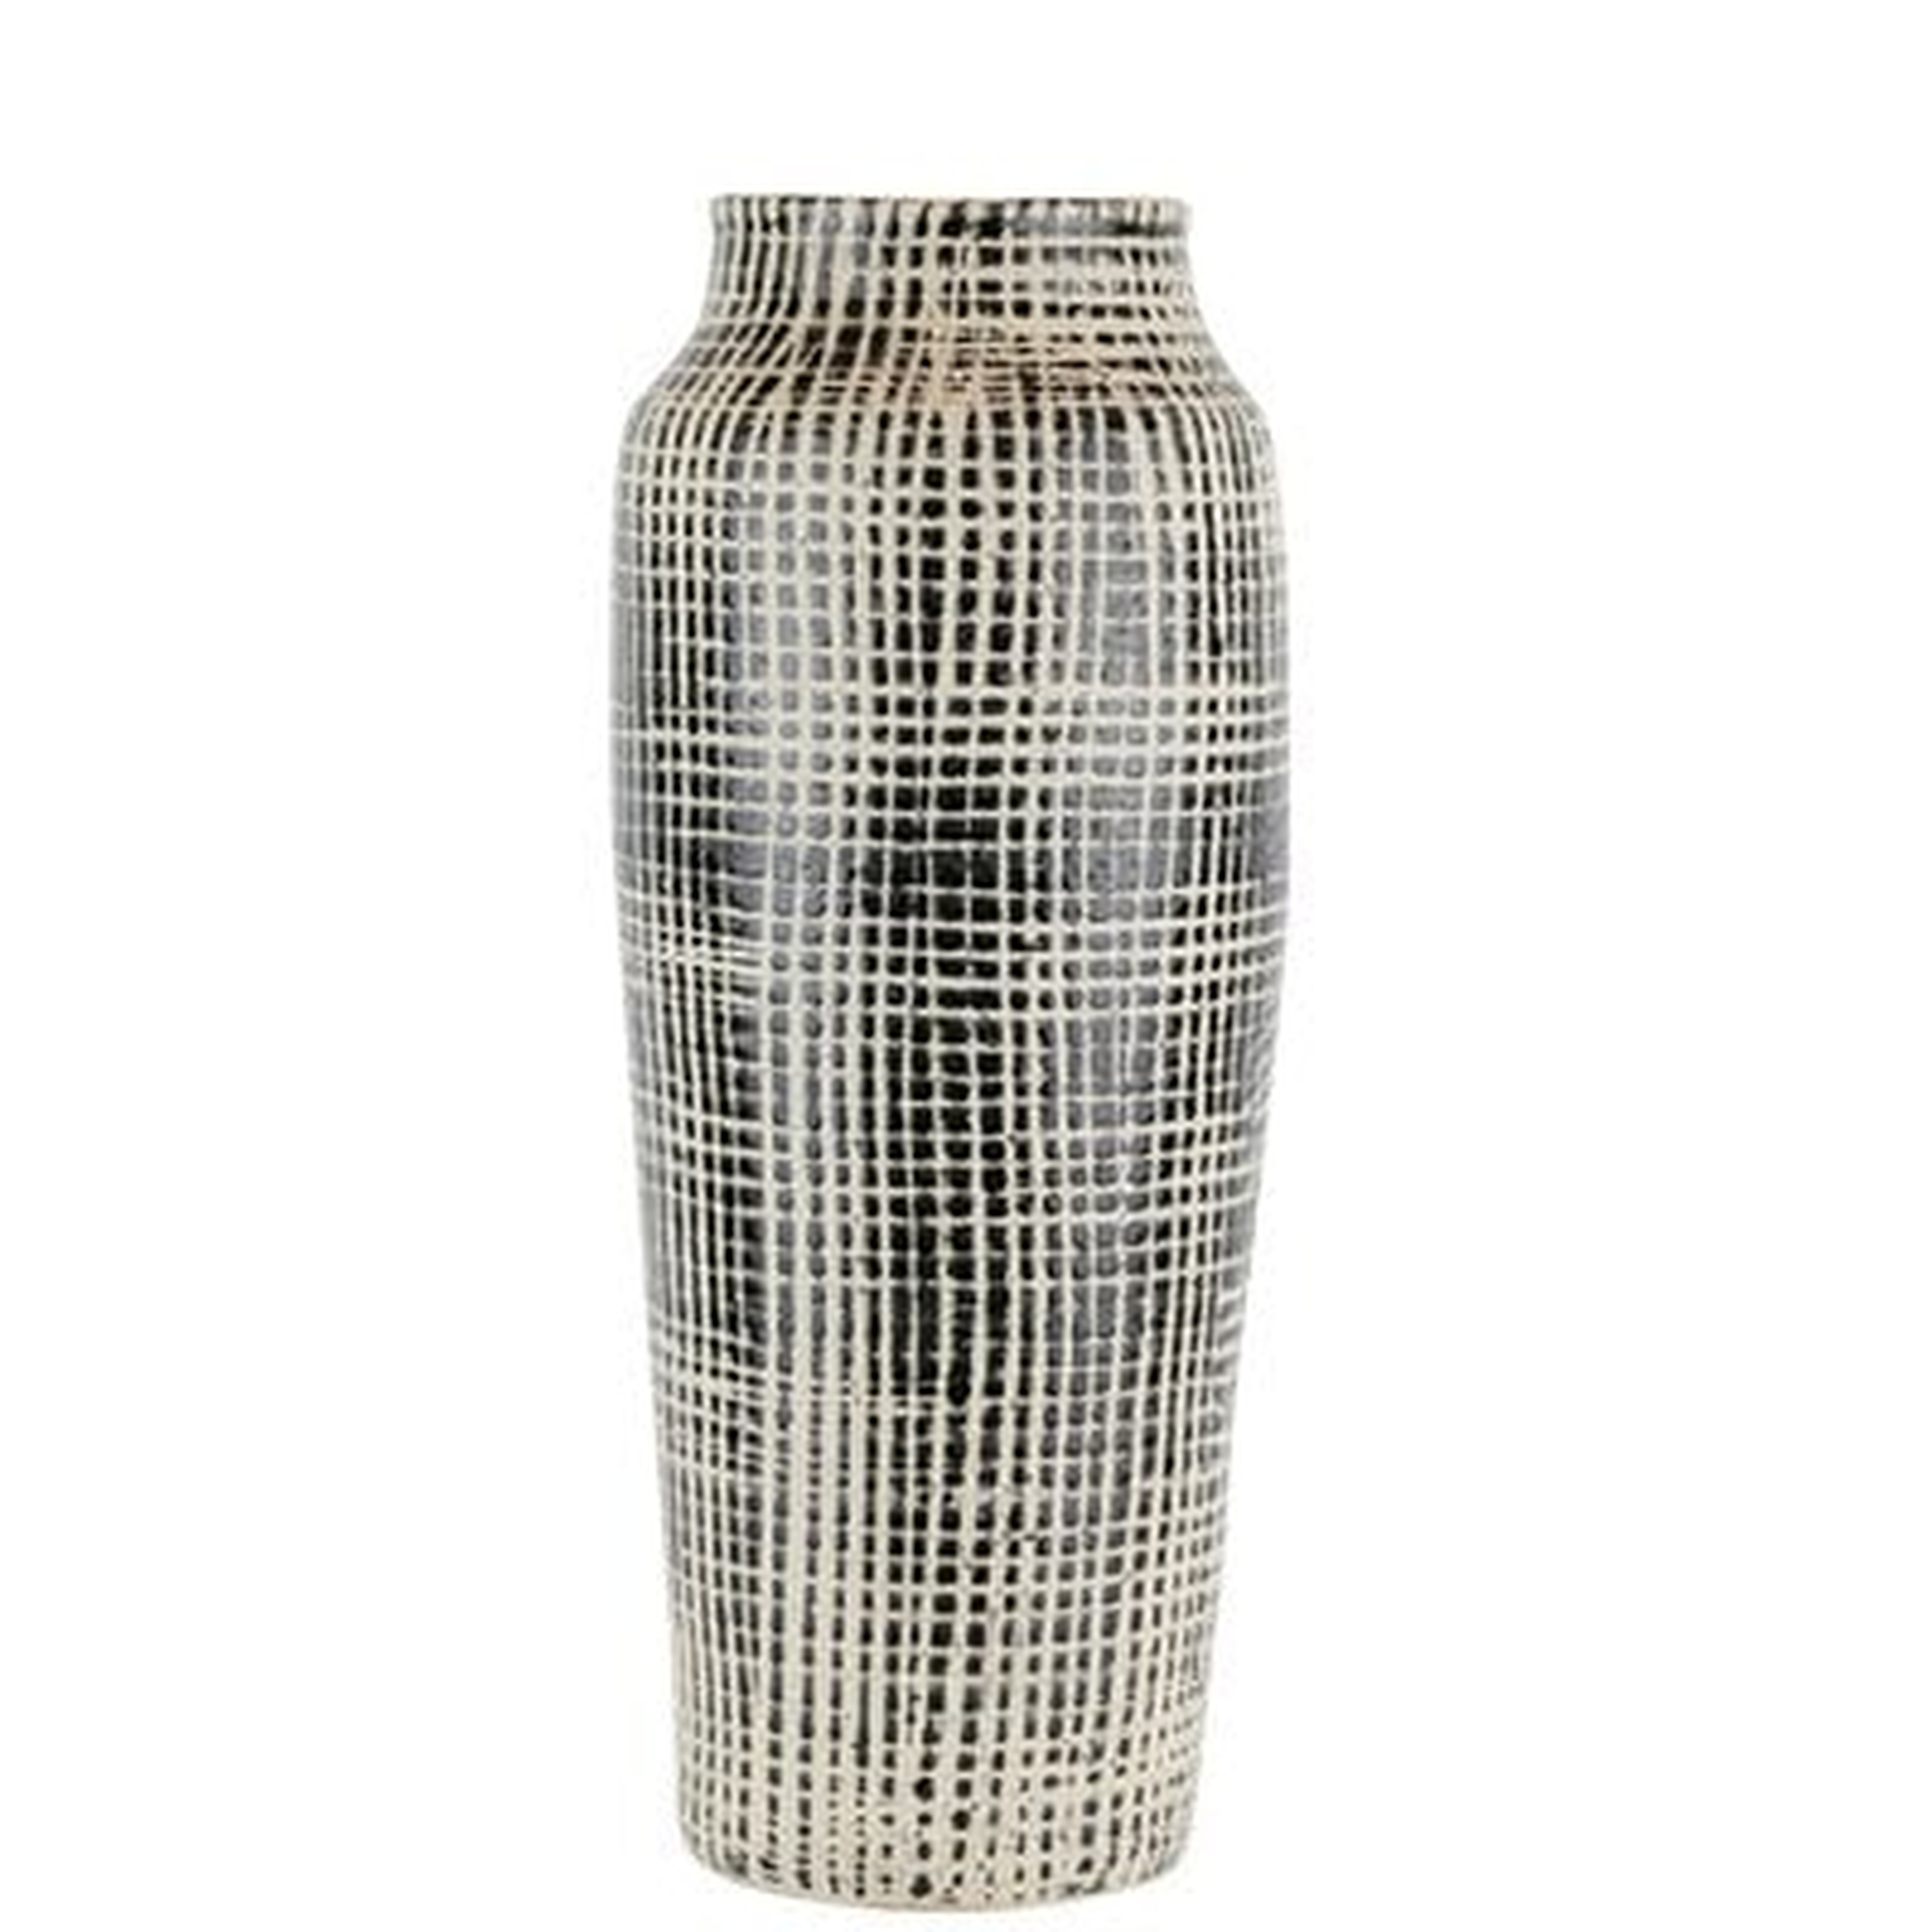 Venegas Ceramic Vase, 18.75" Black/Beige Mesh Design - Wayfair